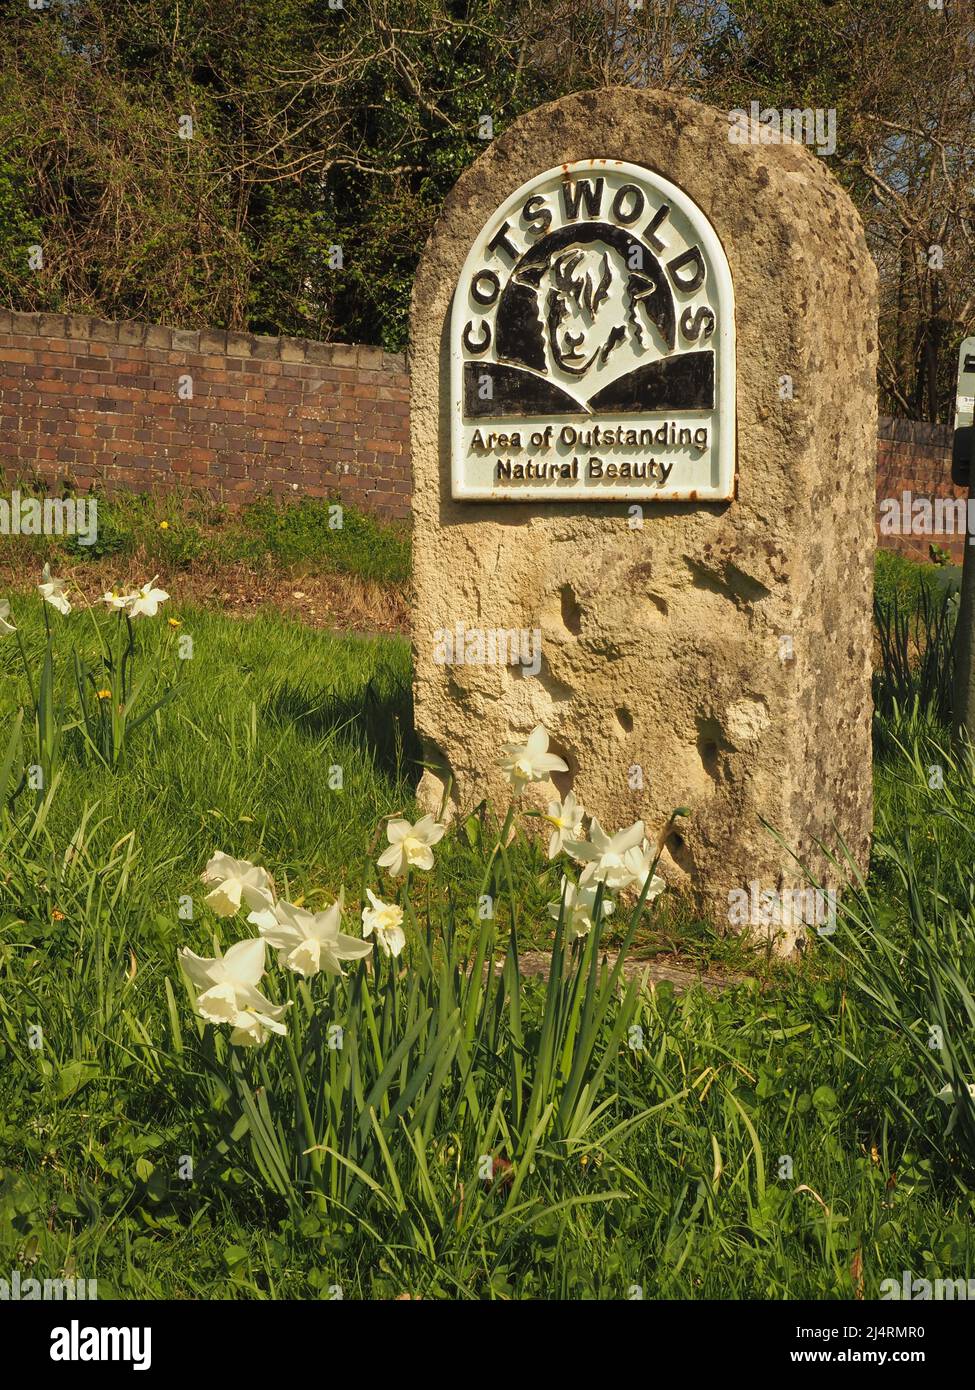 Piedra que representa una oveja, marcando la entrada a la zona de Cotswolds de belleza natural excepcional (AONB), nr. Combe Hay, Somerset, Inglaterra, narcissi. Foto de stock